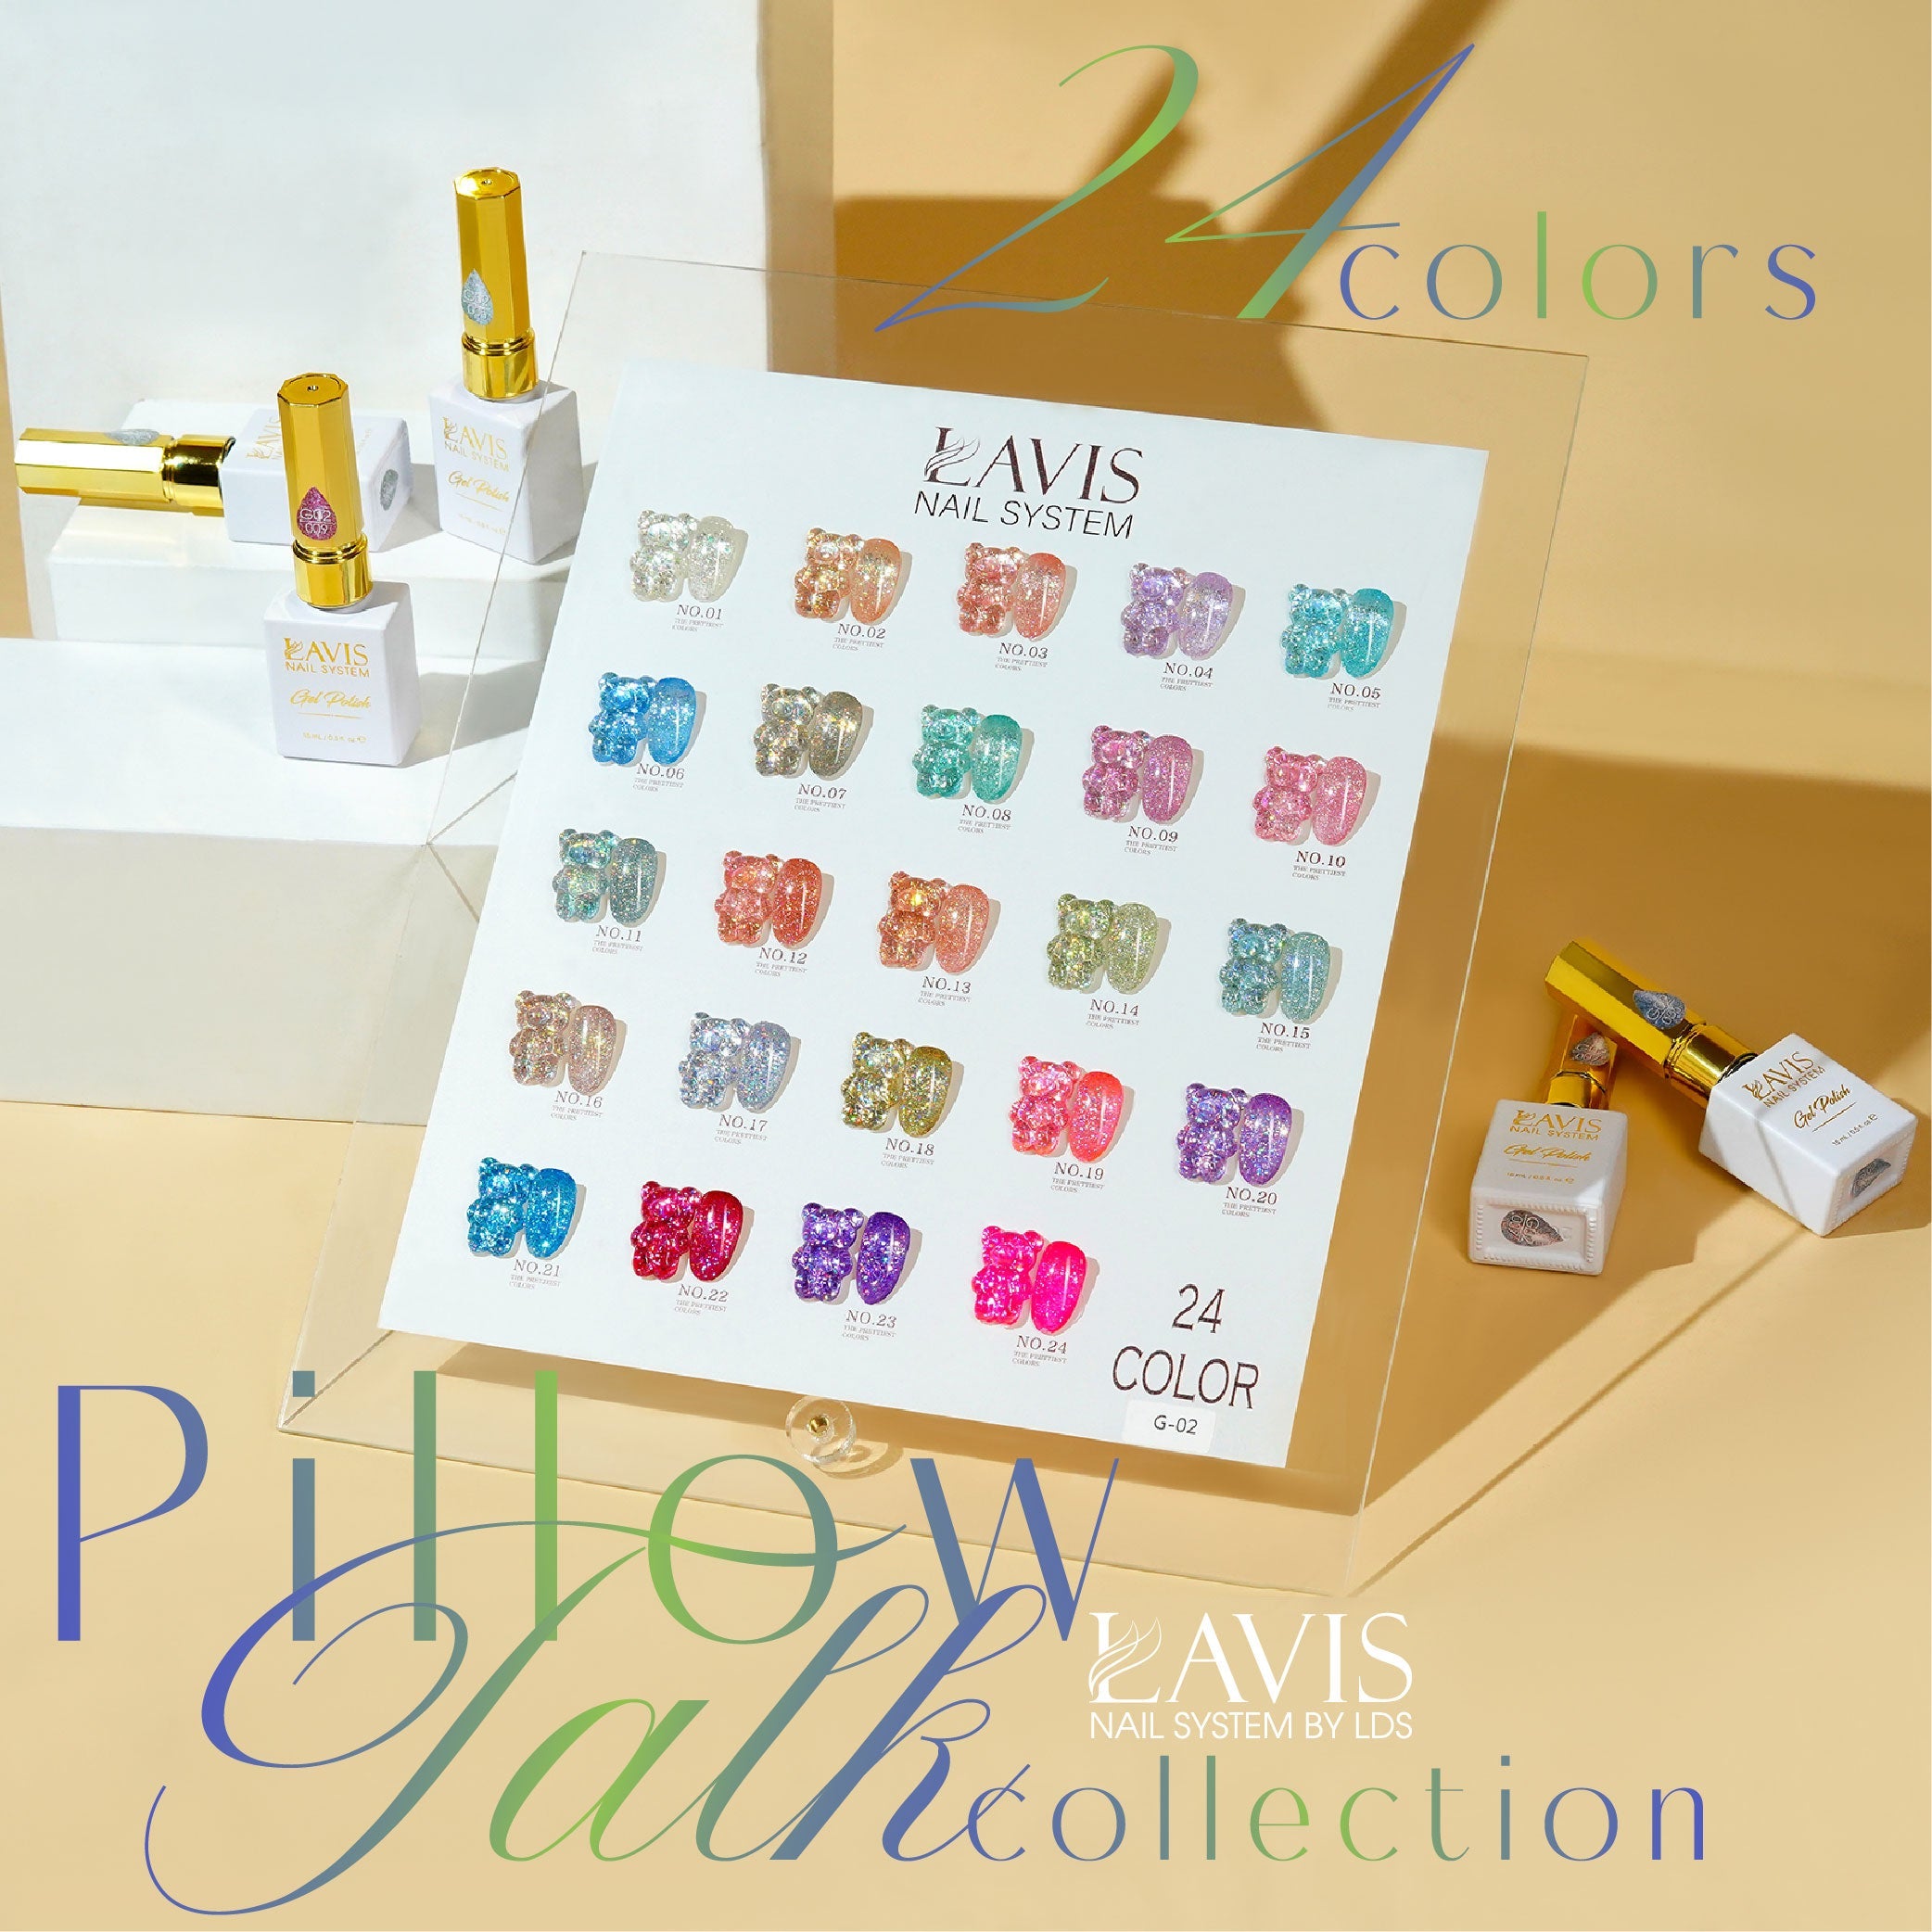 LAVIS Glitter G02 - 21 - Gel Polish 0.5 oz - Pillow Talk Collection